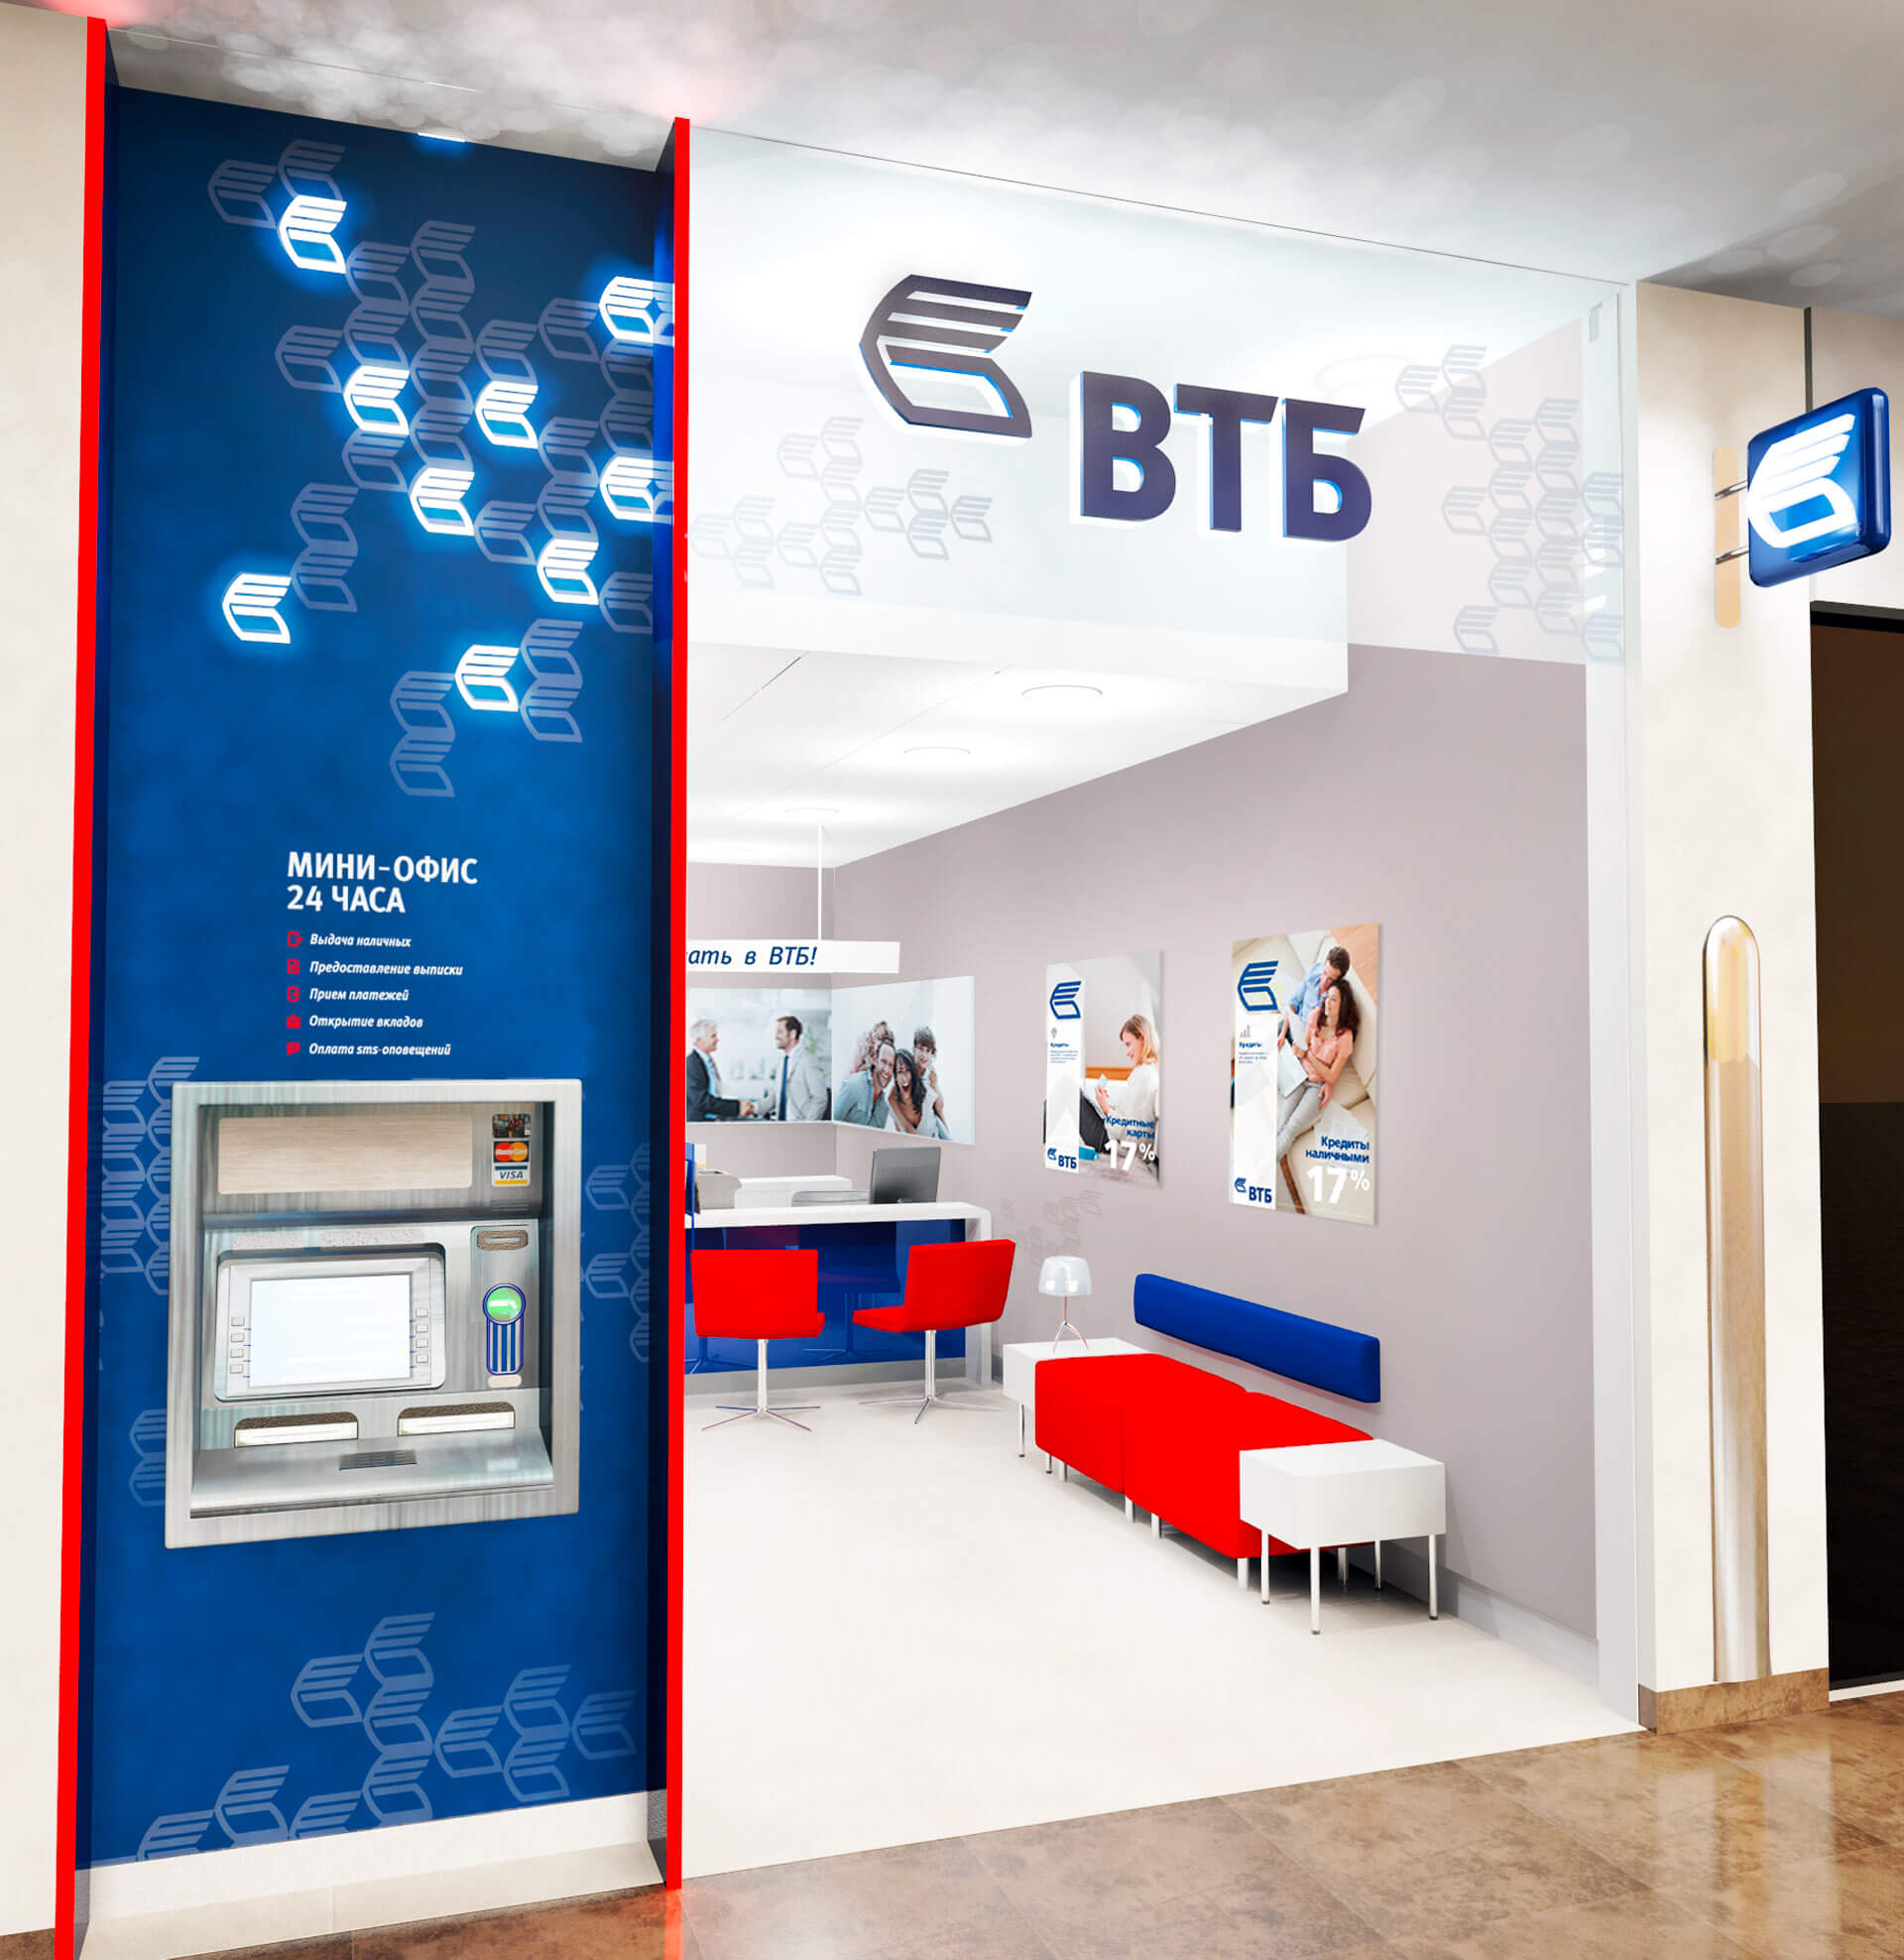 VTB mini bank branch retail design, brand identity, retailer interiors and marketing services